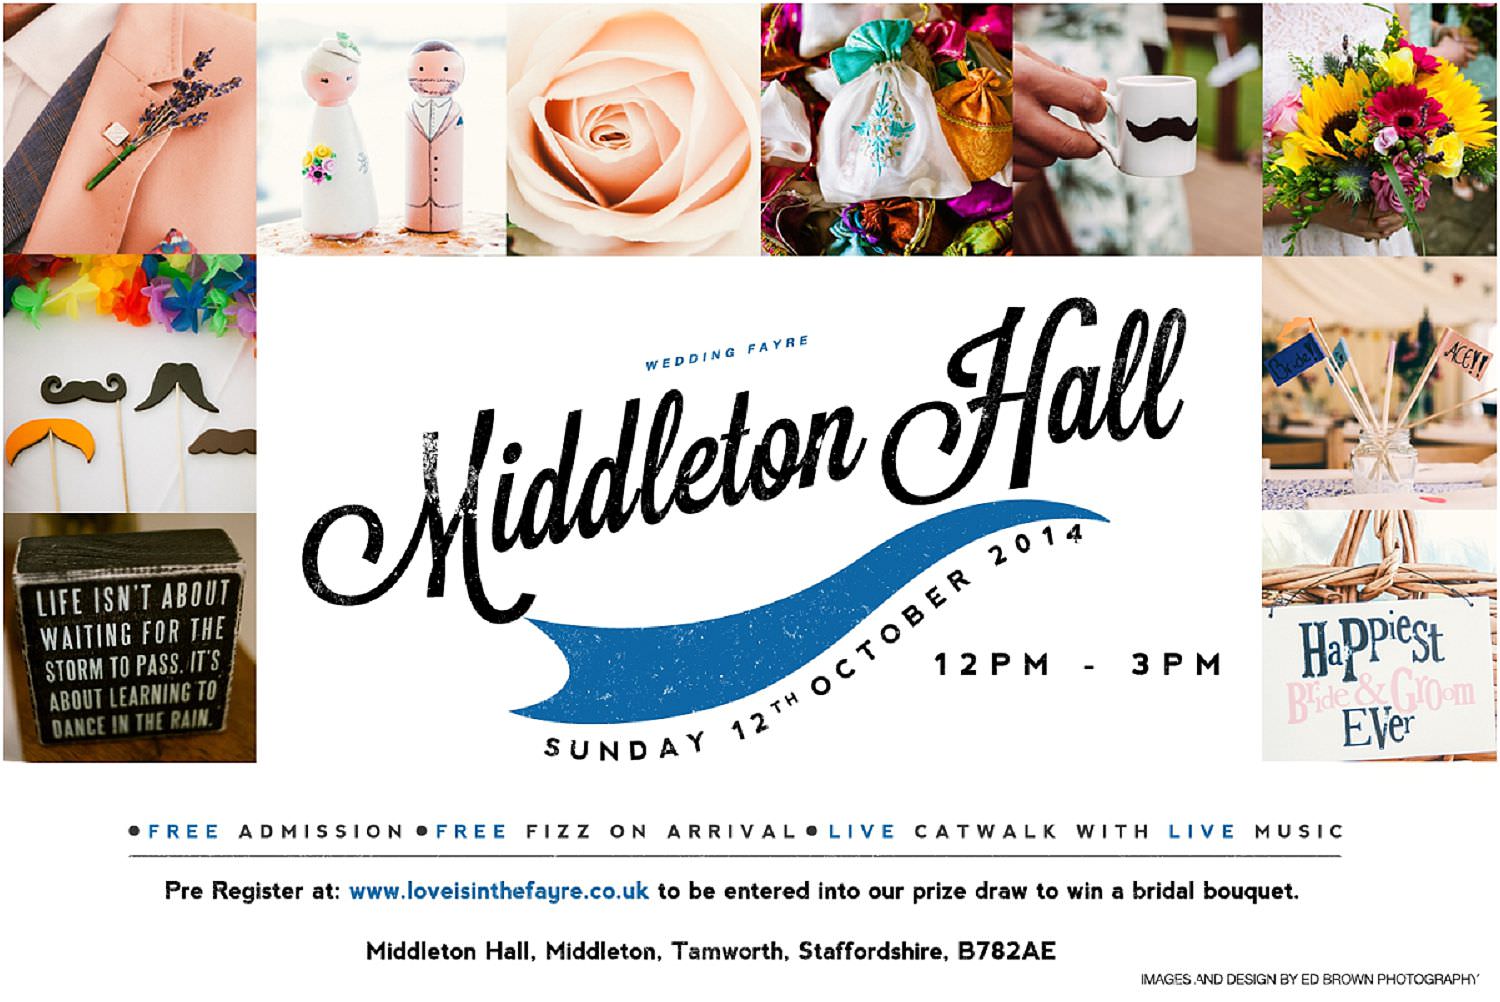 Middleton Hall Wedding Fayre Flyer